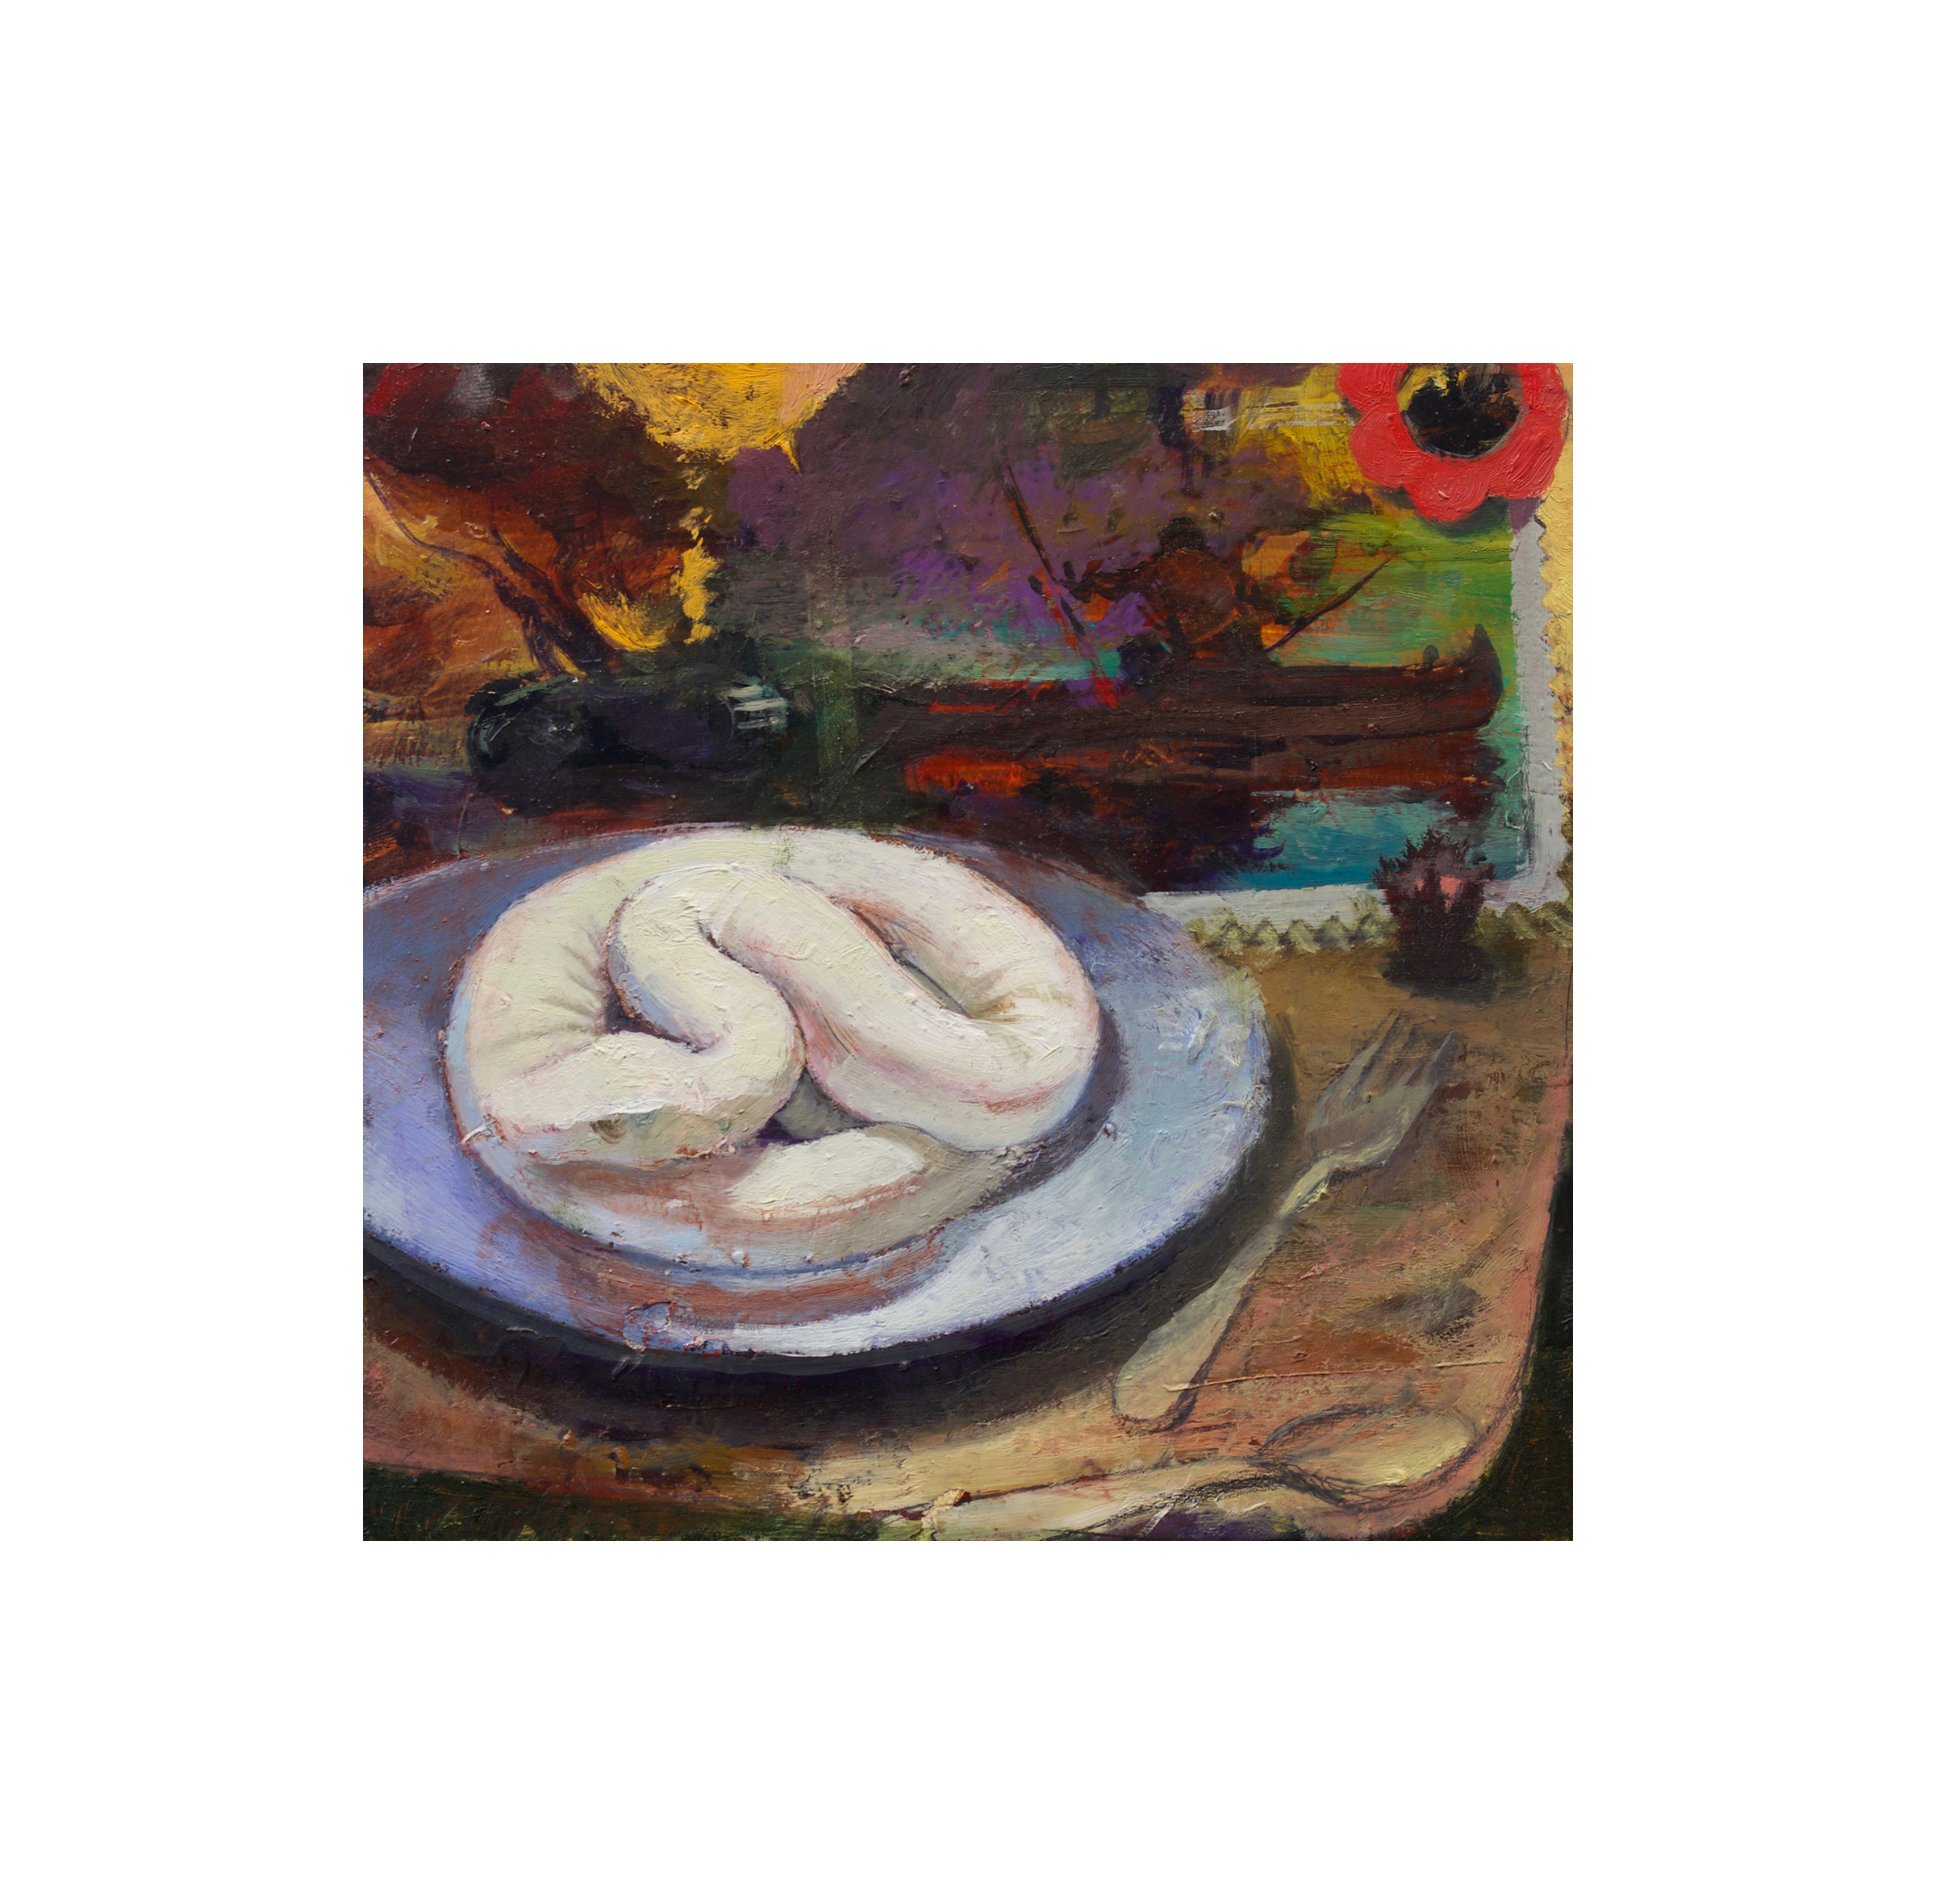   The White Snake , 2017  oil on panel  8 x 9 in.       